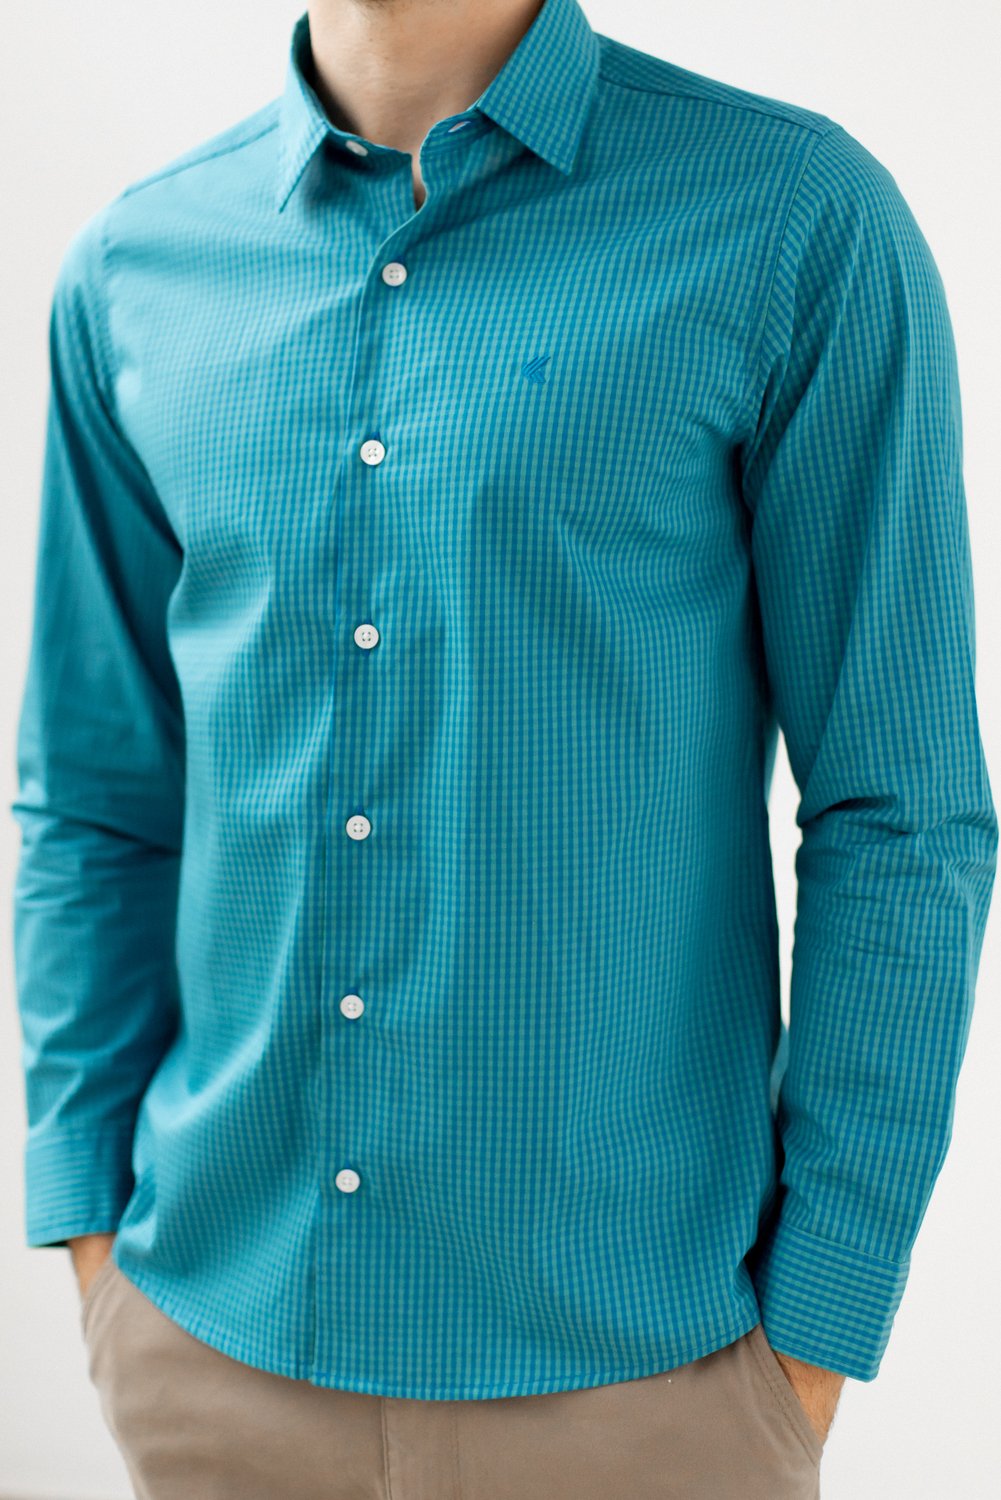 Camisa Slim Fit Xadrez Azul e Verde 4